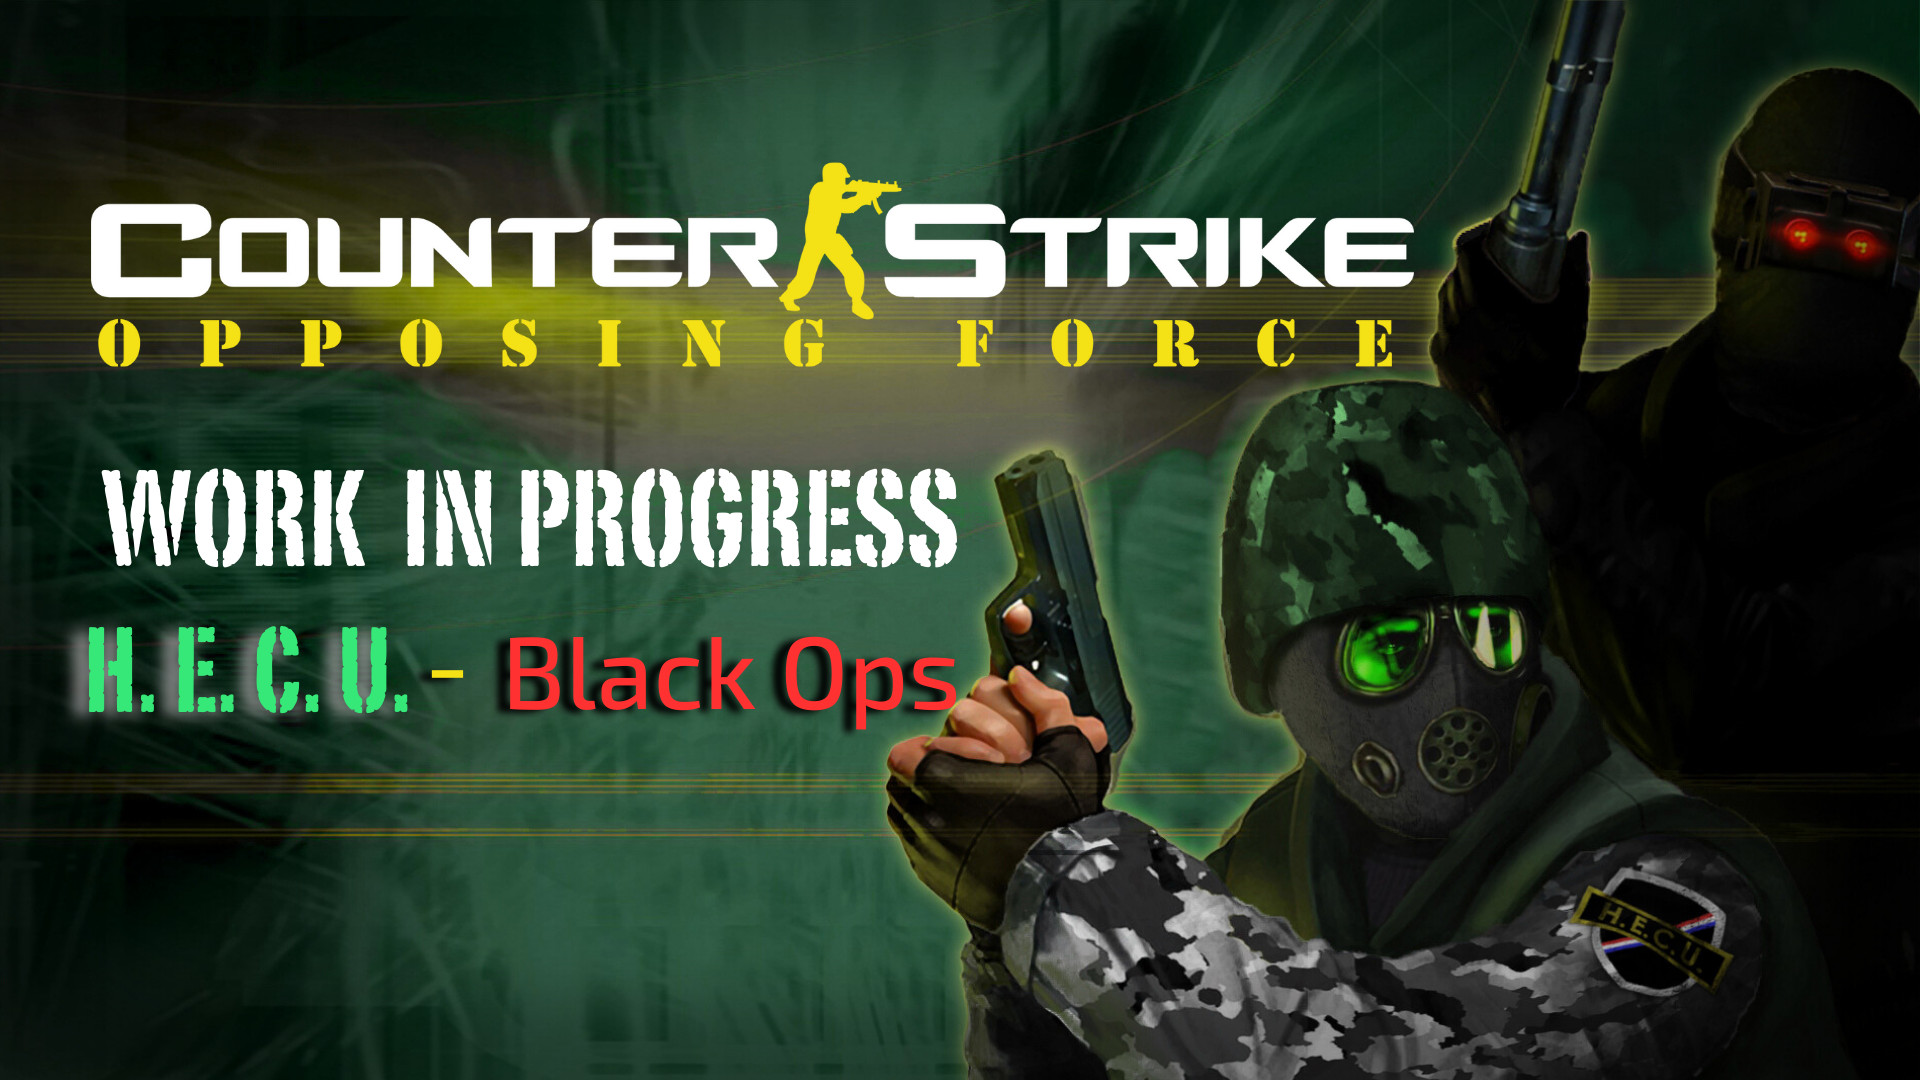 Counter-Strike: Opposing Force [Counter-Strike: Condition Zero